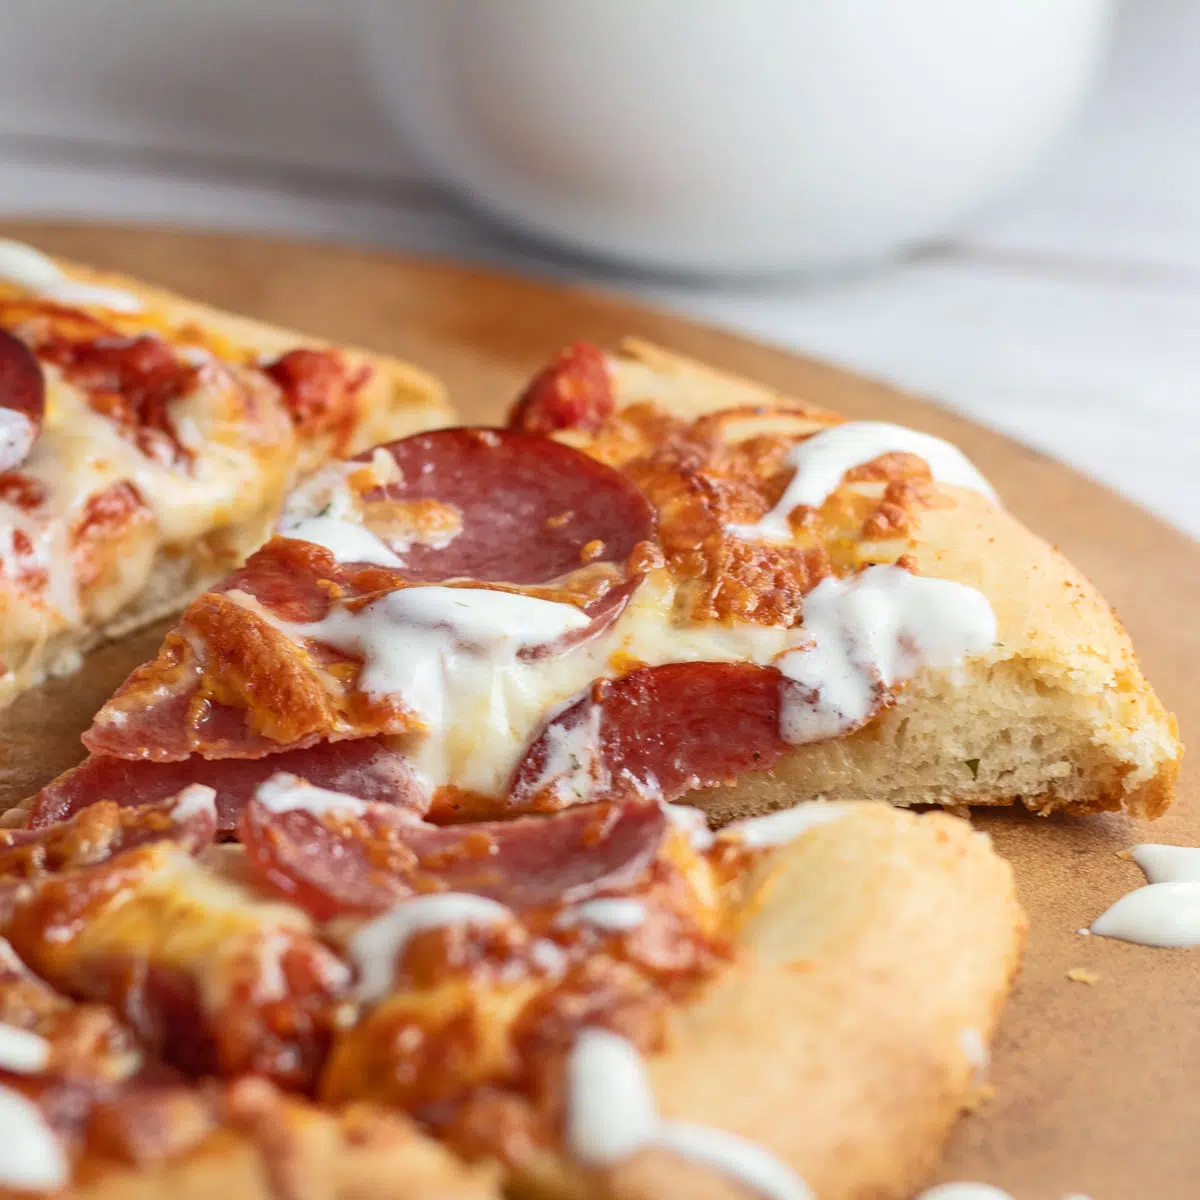 Berapa lama pizza akan bertahan di lemari es jika disimpan dengan aman.